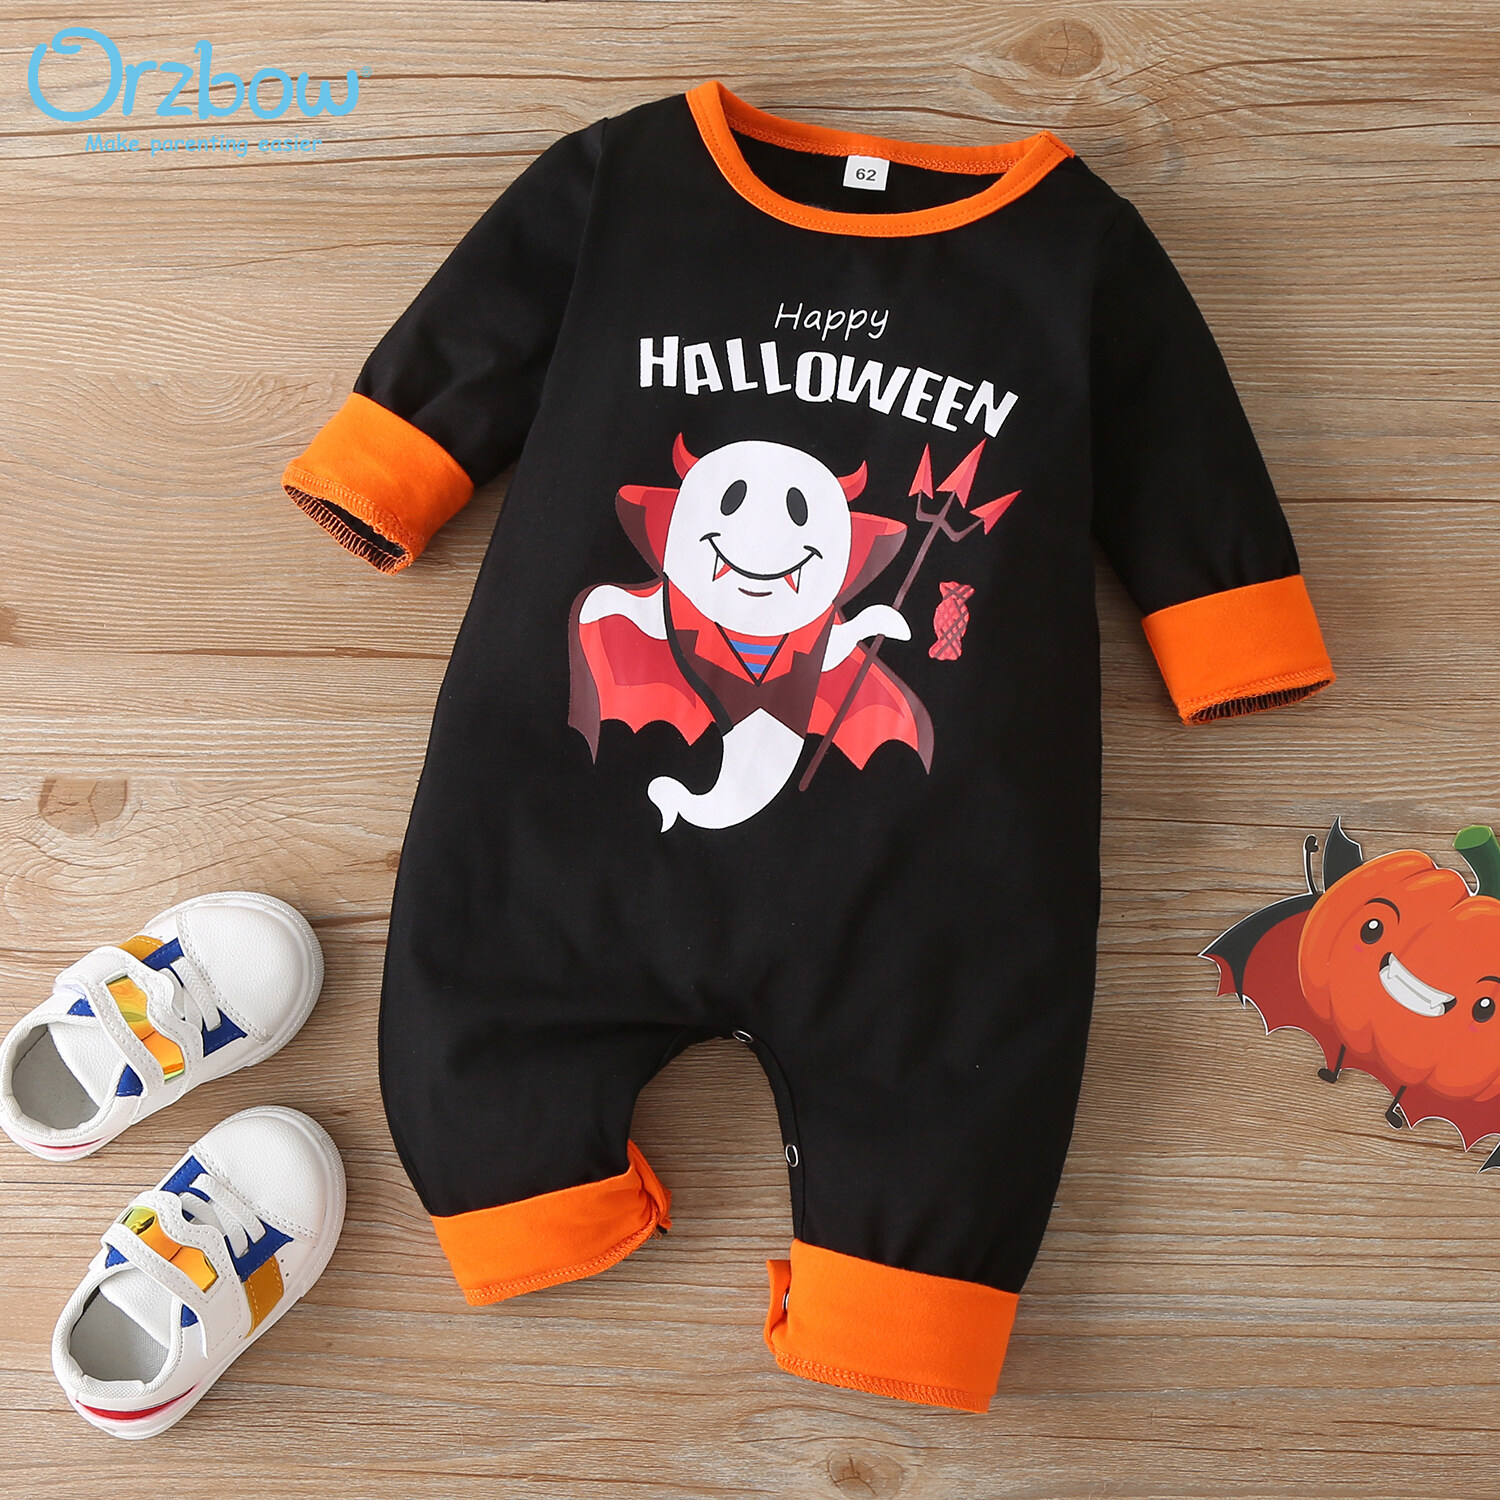 Orzbow Happy Halloween Newborn Baby Romper Infant Jumpsuit Trick or Treat